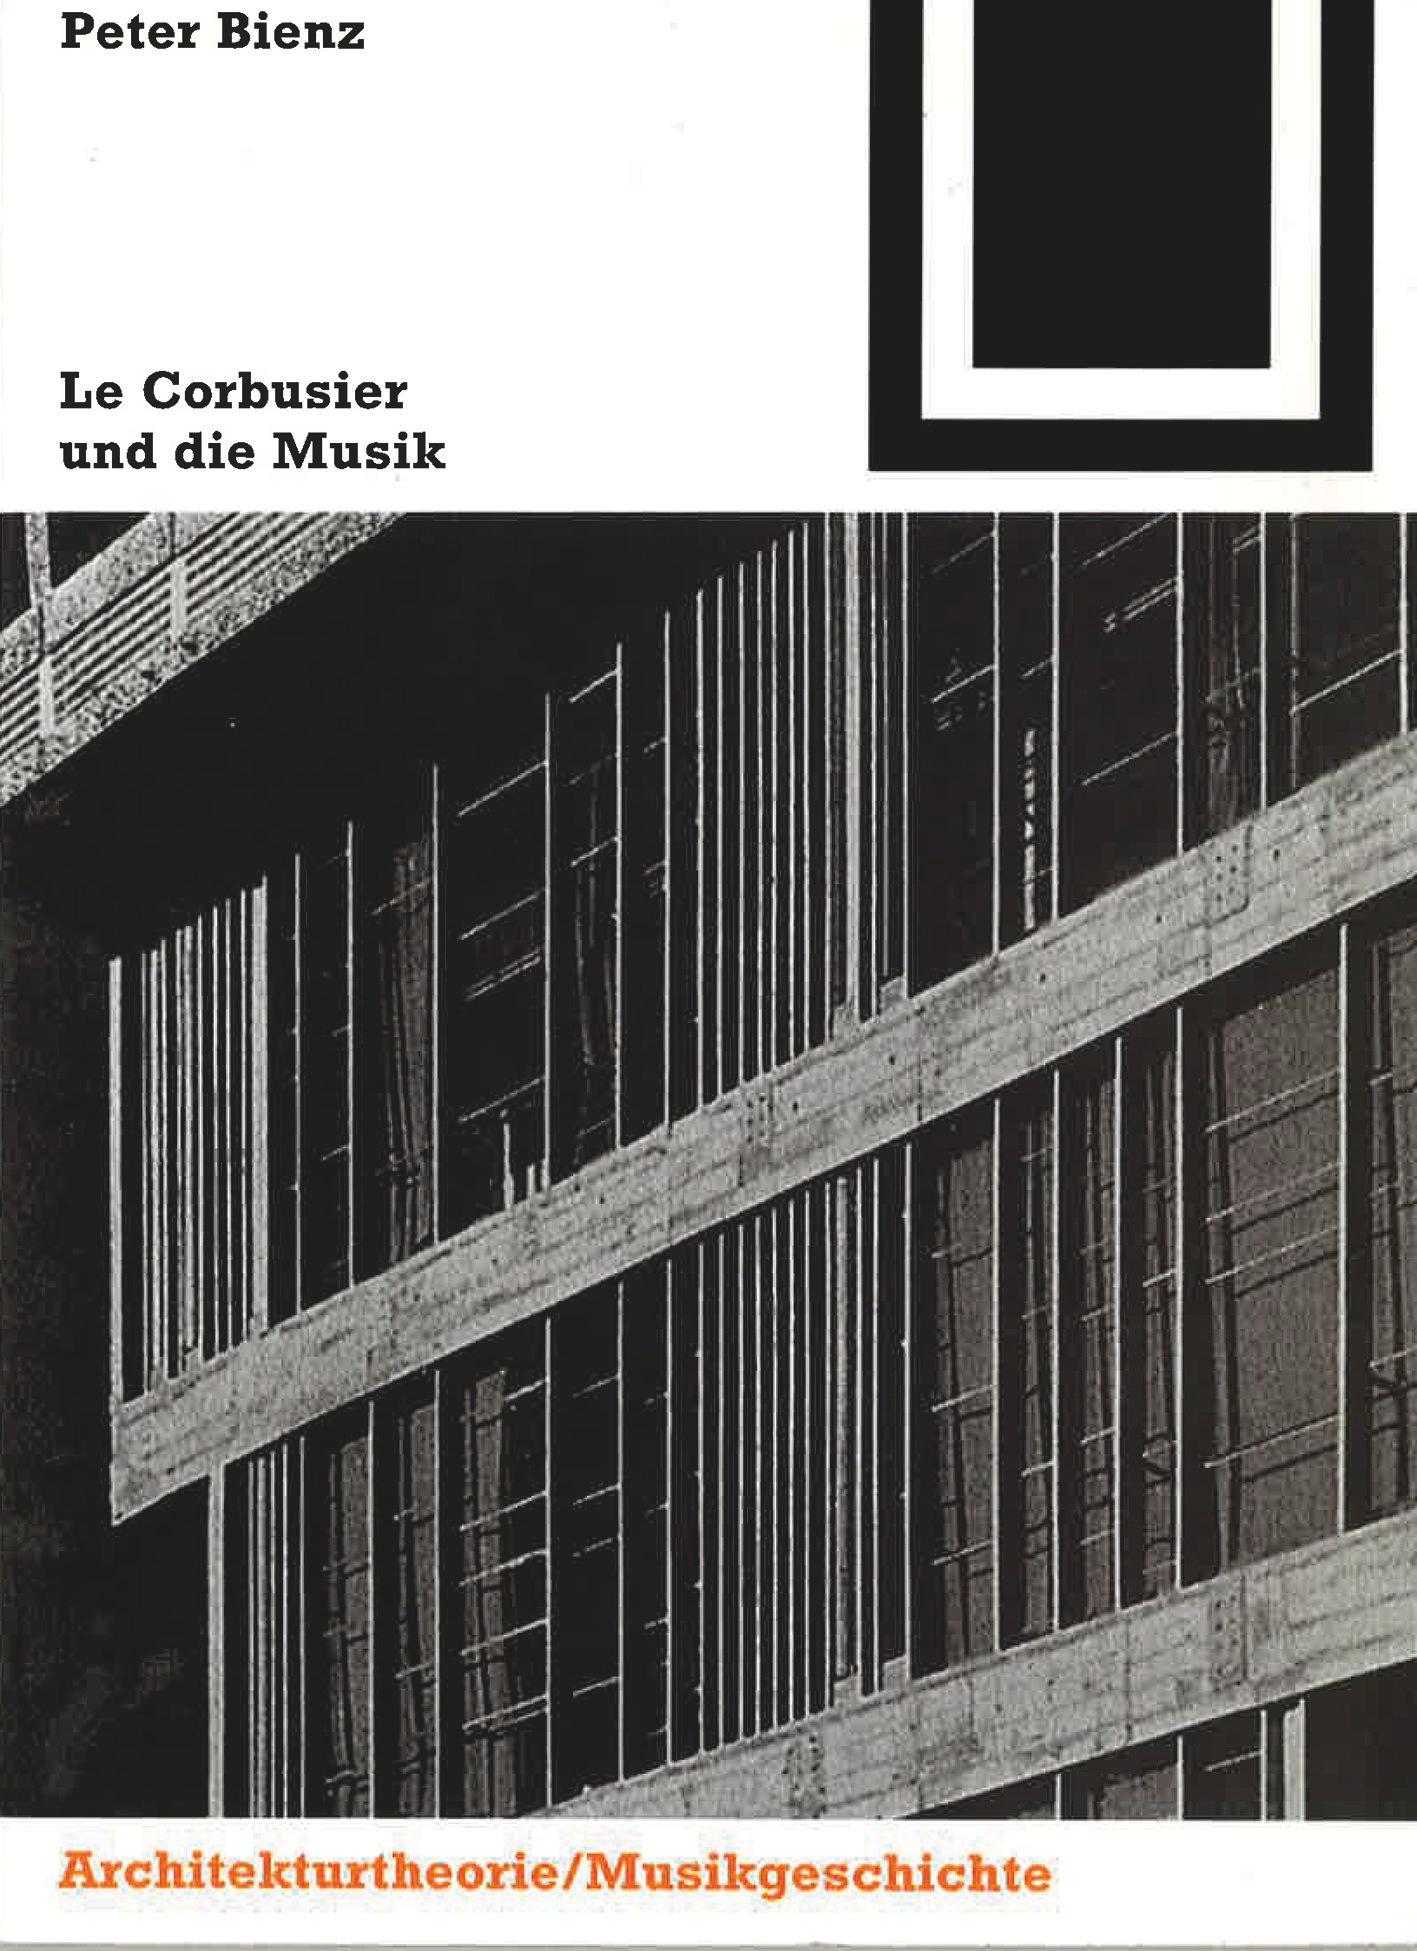 Le Corbusier und die Musik's cover